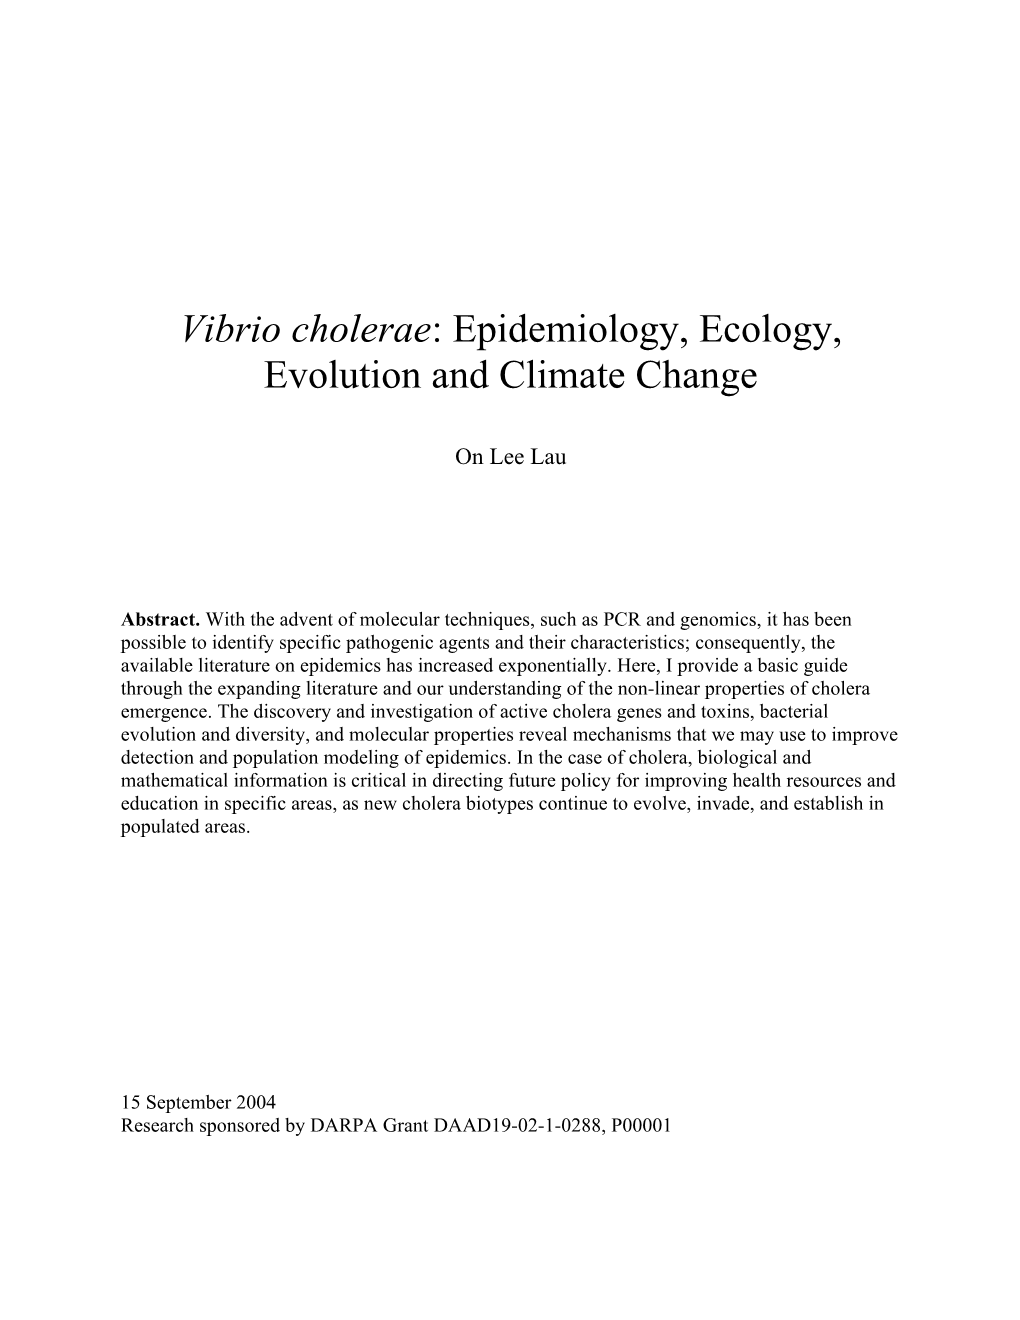 Vibrio Cholerae: Ecology, Evolution and Climate Change